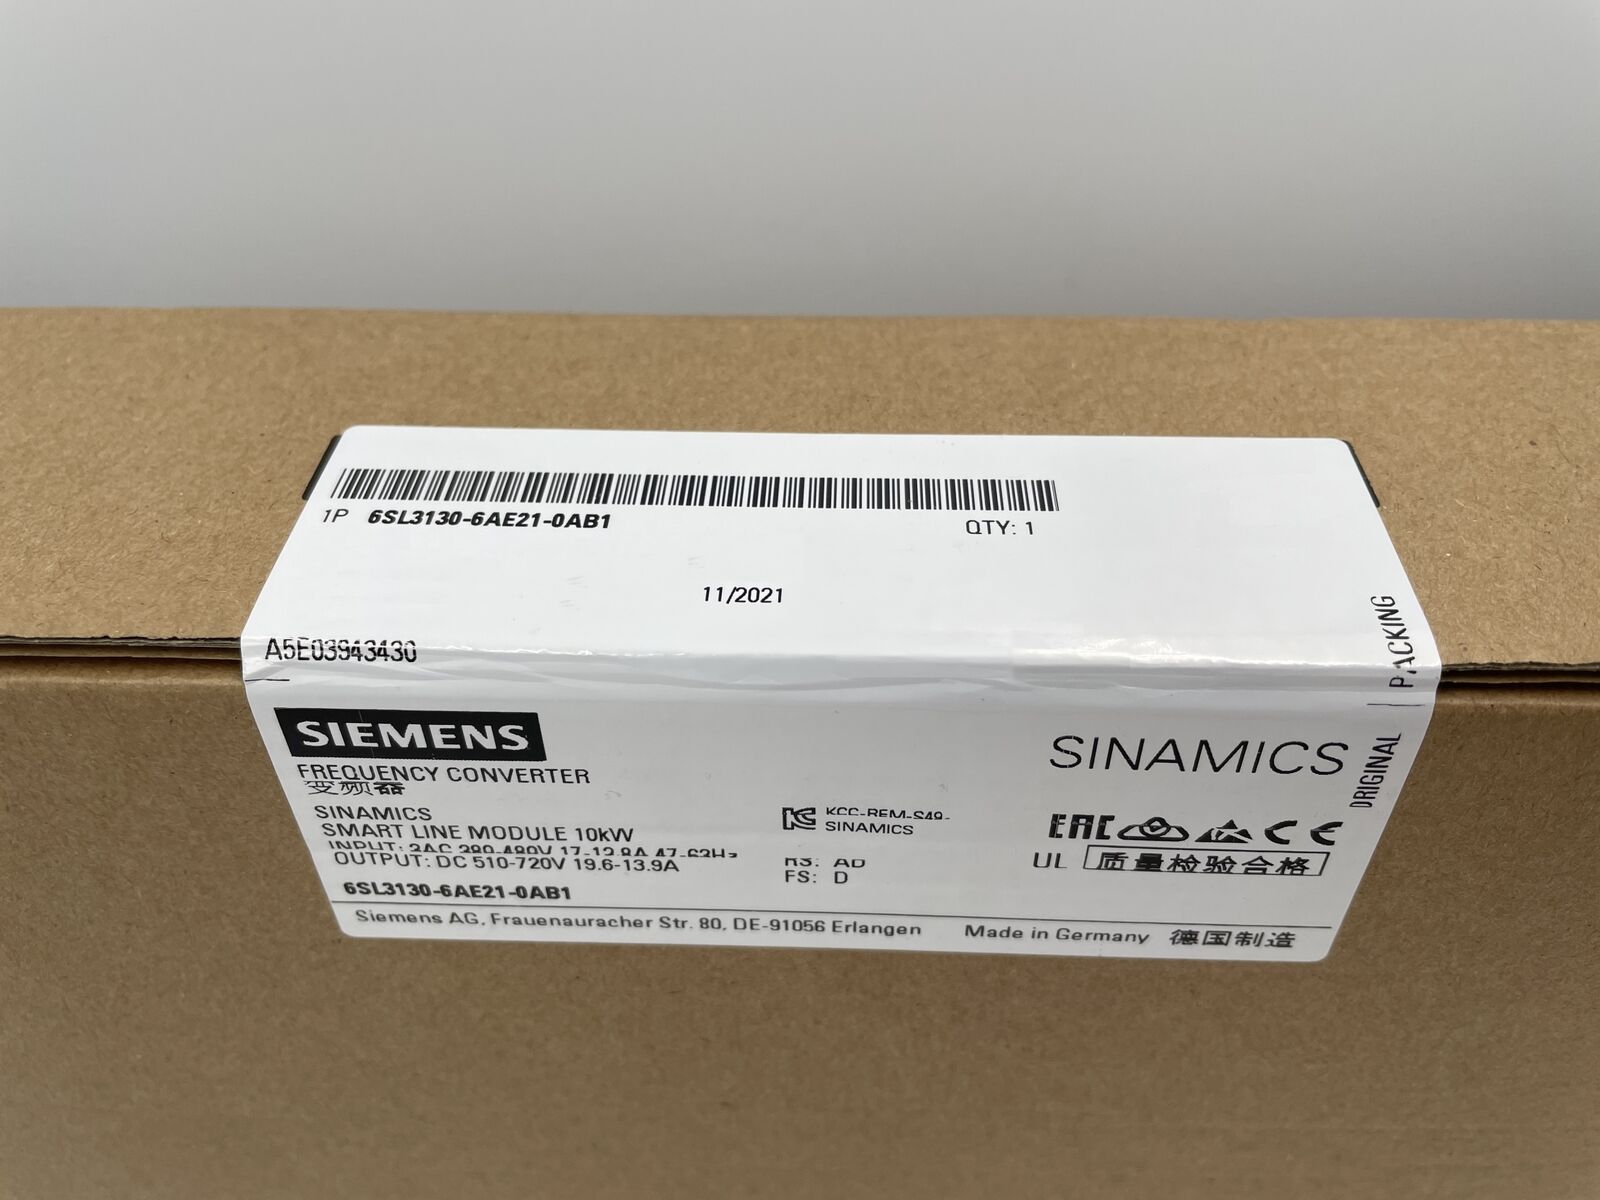 New In Box Siemens 6SL3130-6AE21-0AB1 SINAMICS S120 Module 6SL3 130-6AE21-0AB1